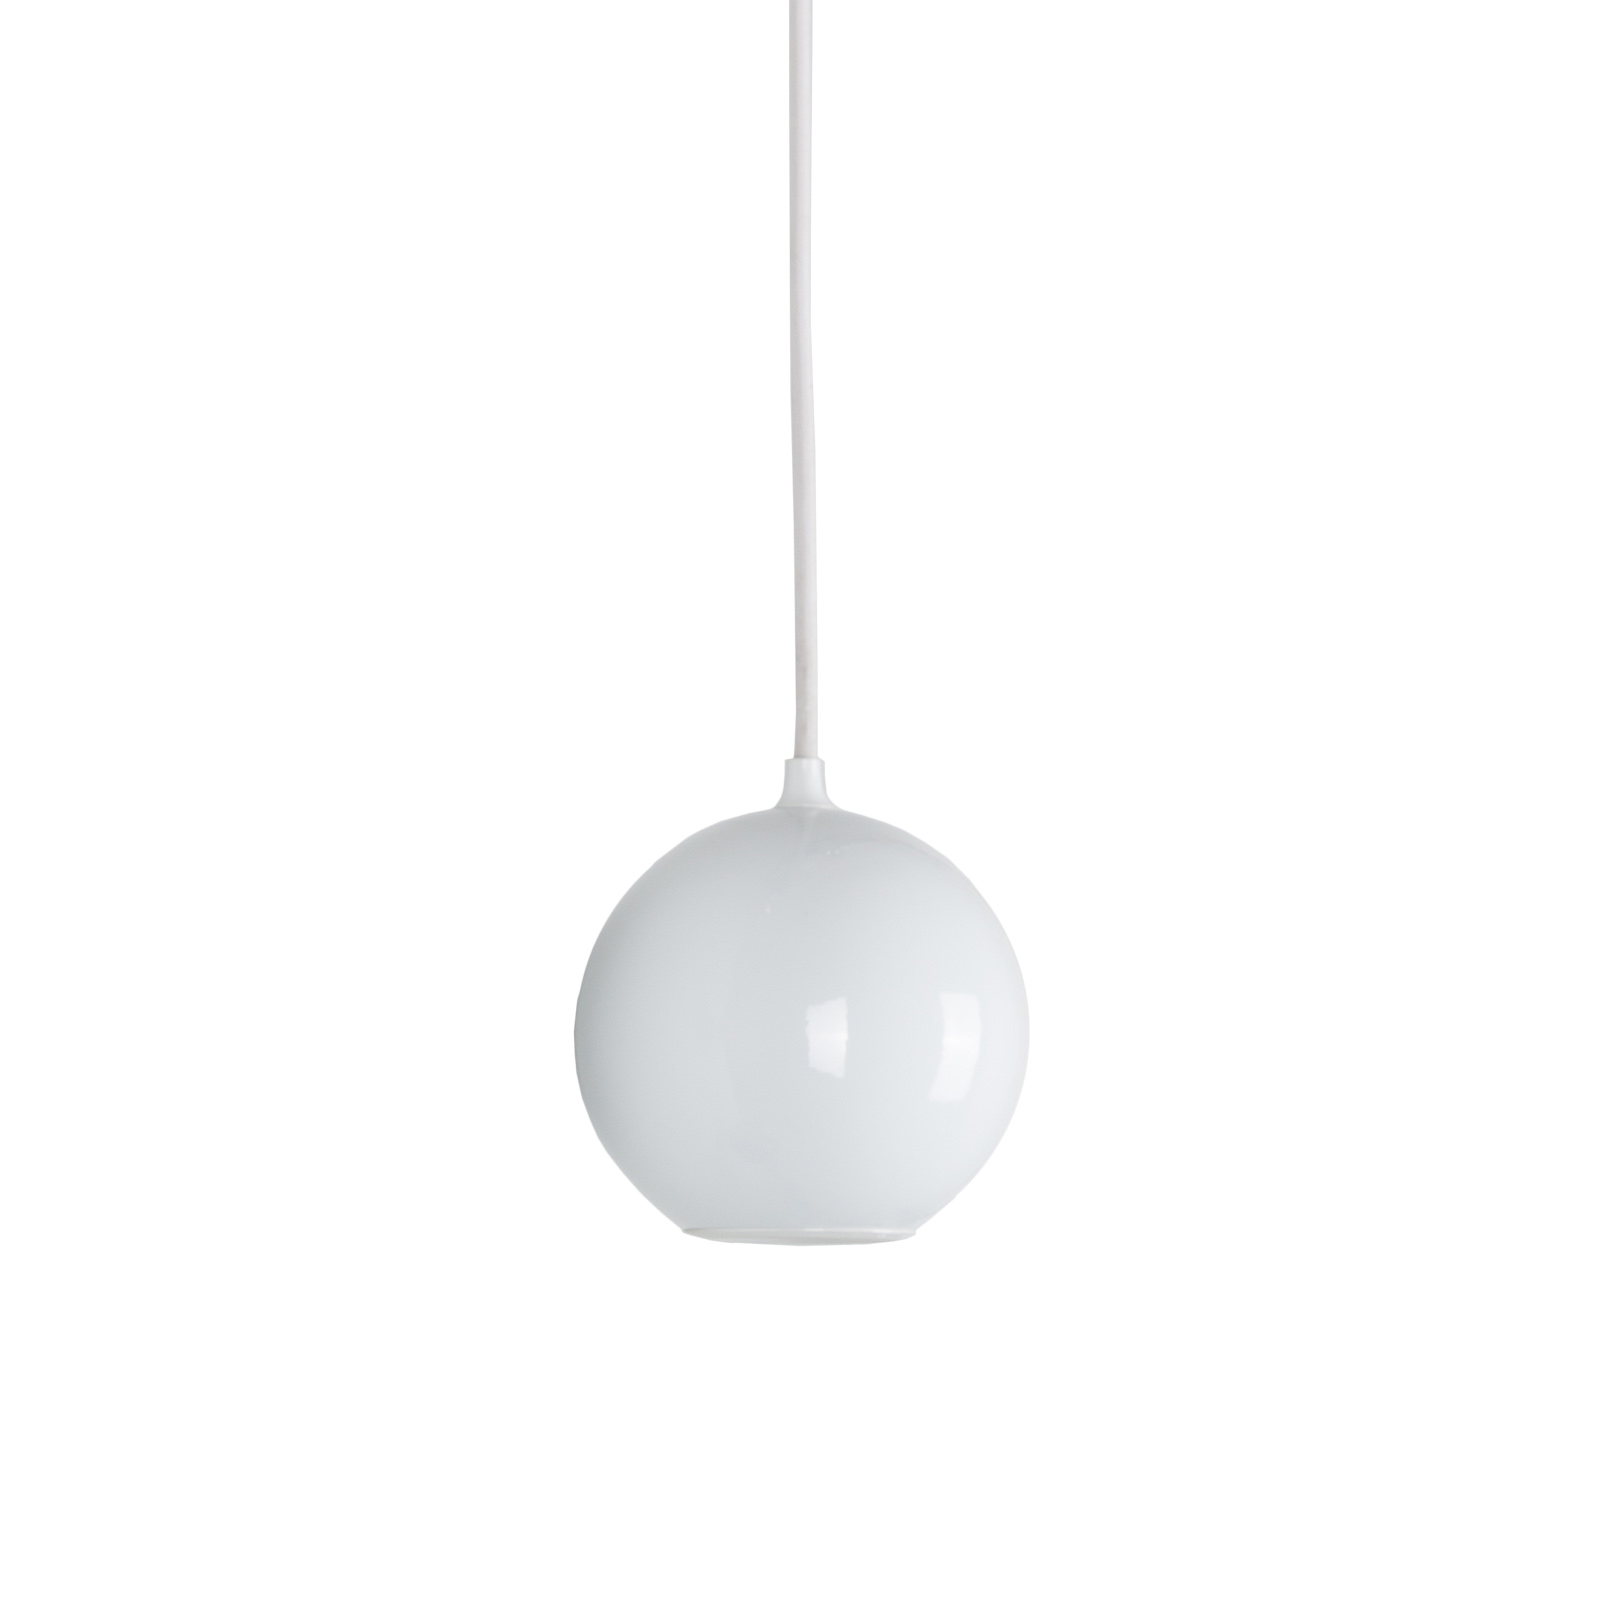 Innermost Boule hanglamp, wit glanzend